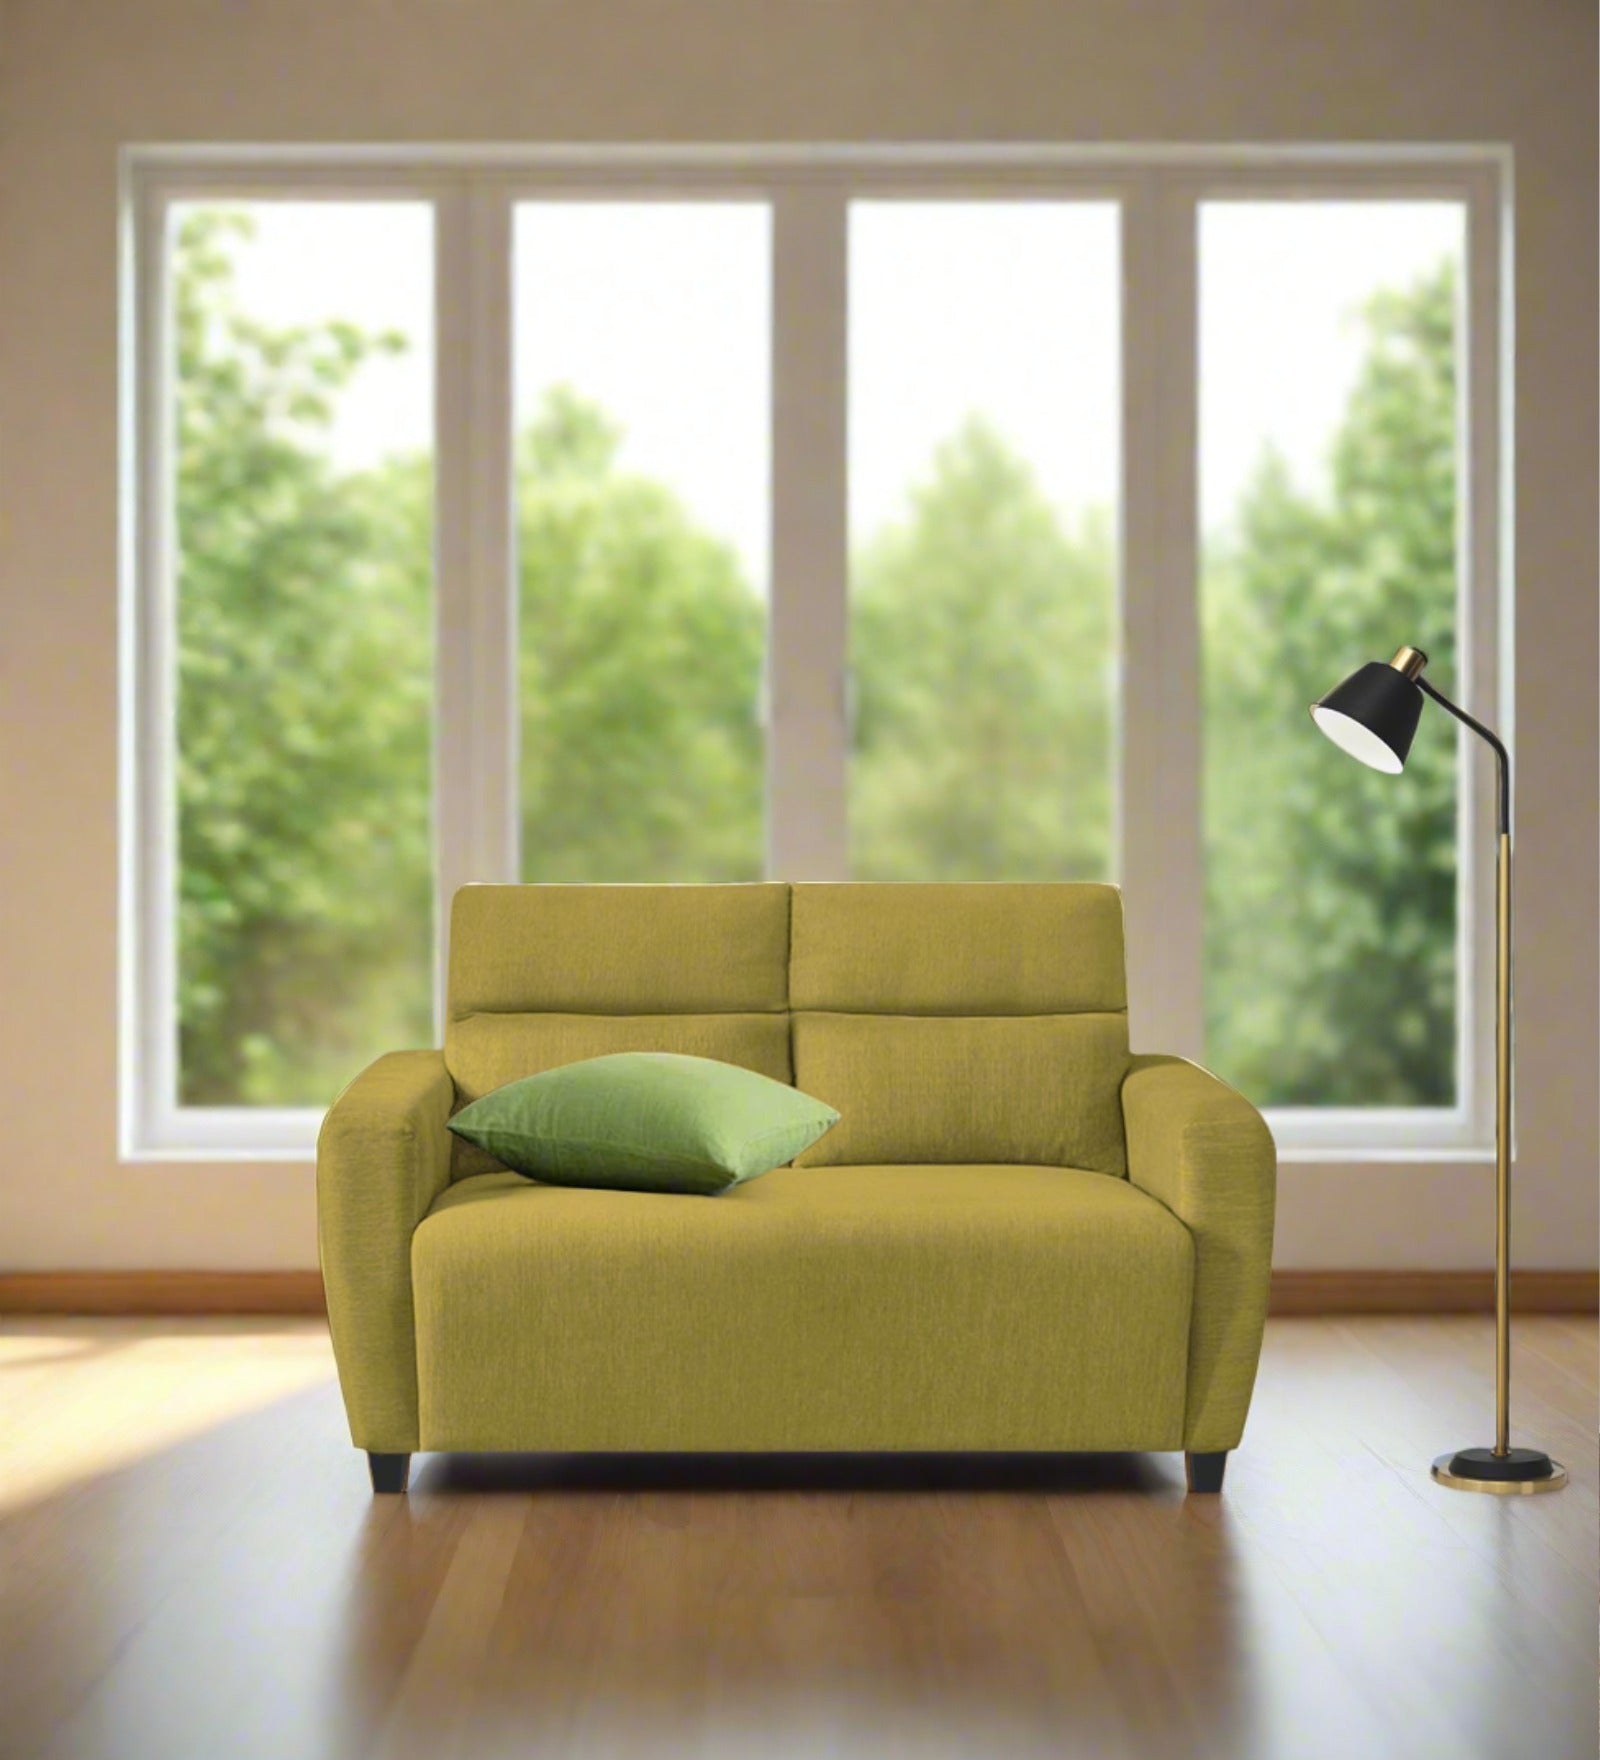 Bakadi Fabric 2 Seater Sofa in Parrot Green Colour